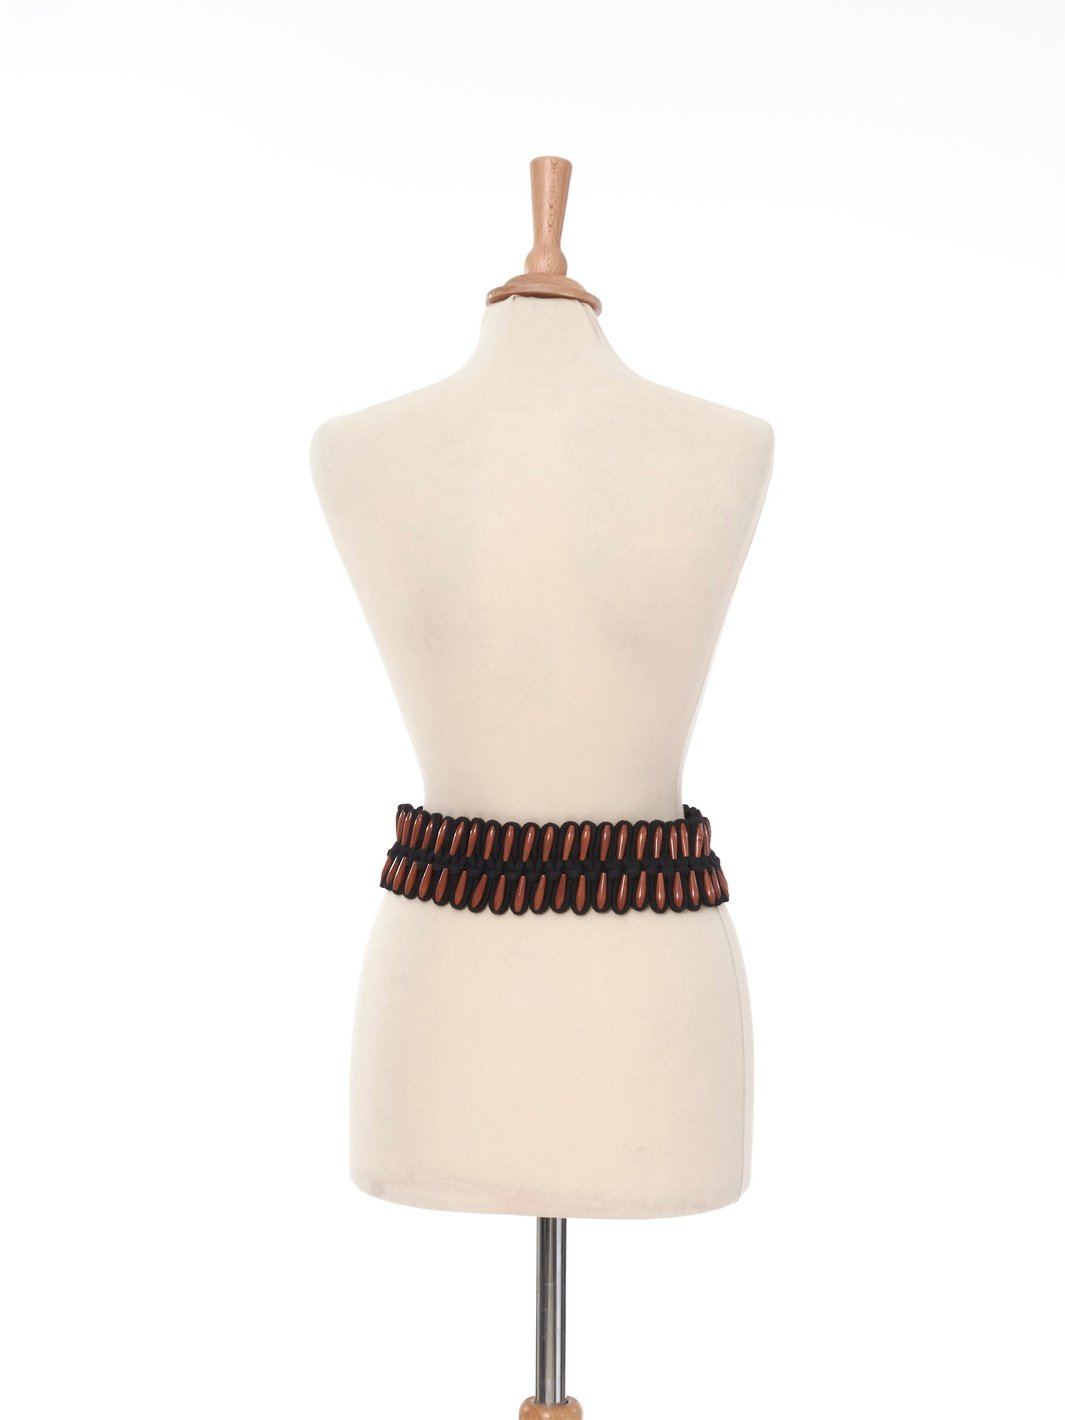 Yves Saint Laurent fabric and wood belt